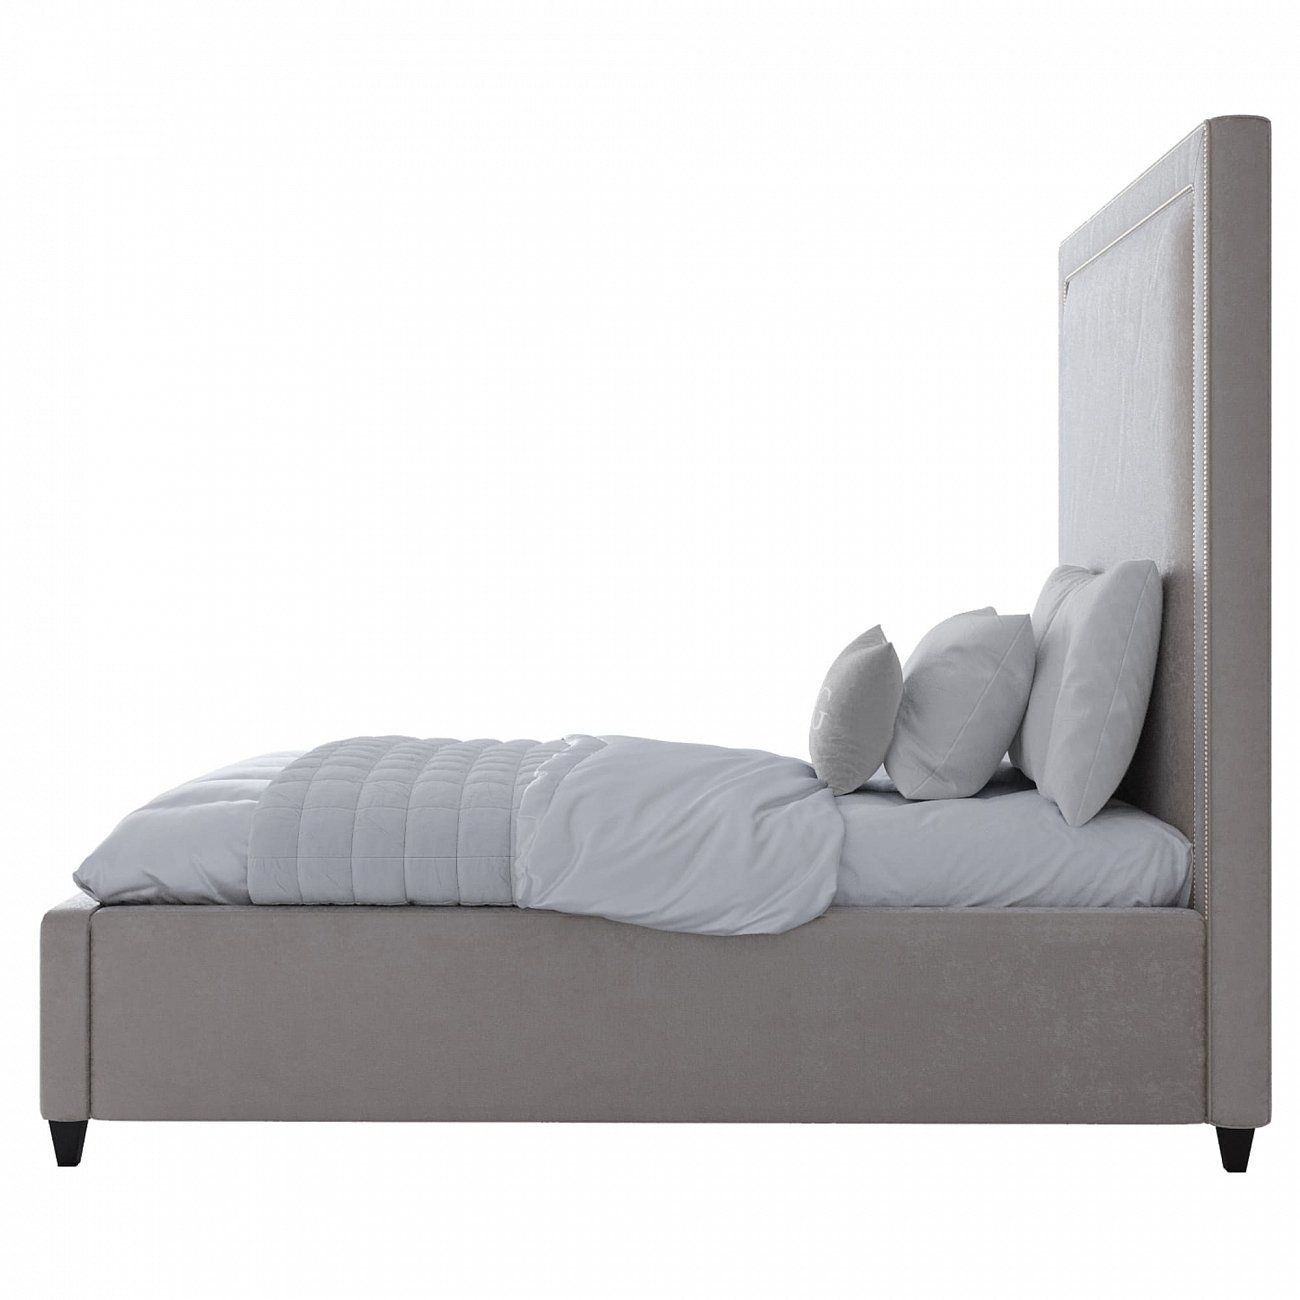 Single bed 90x200 grey Dakota